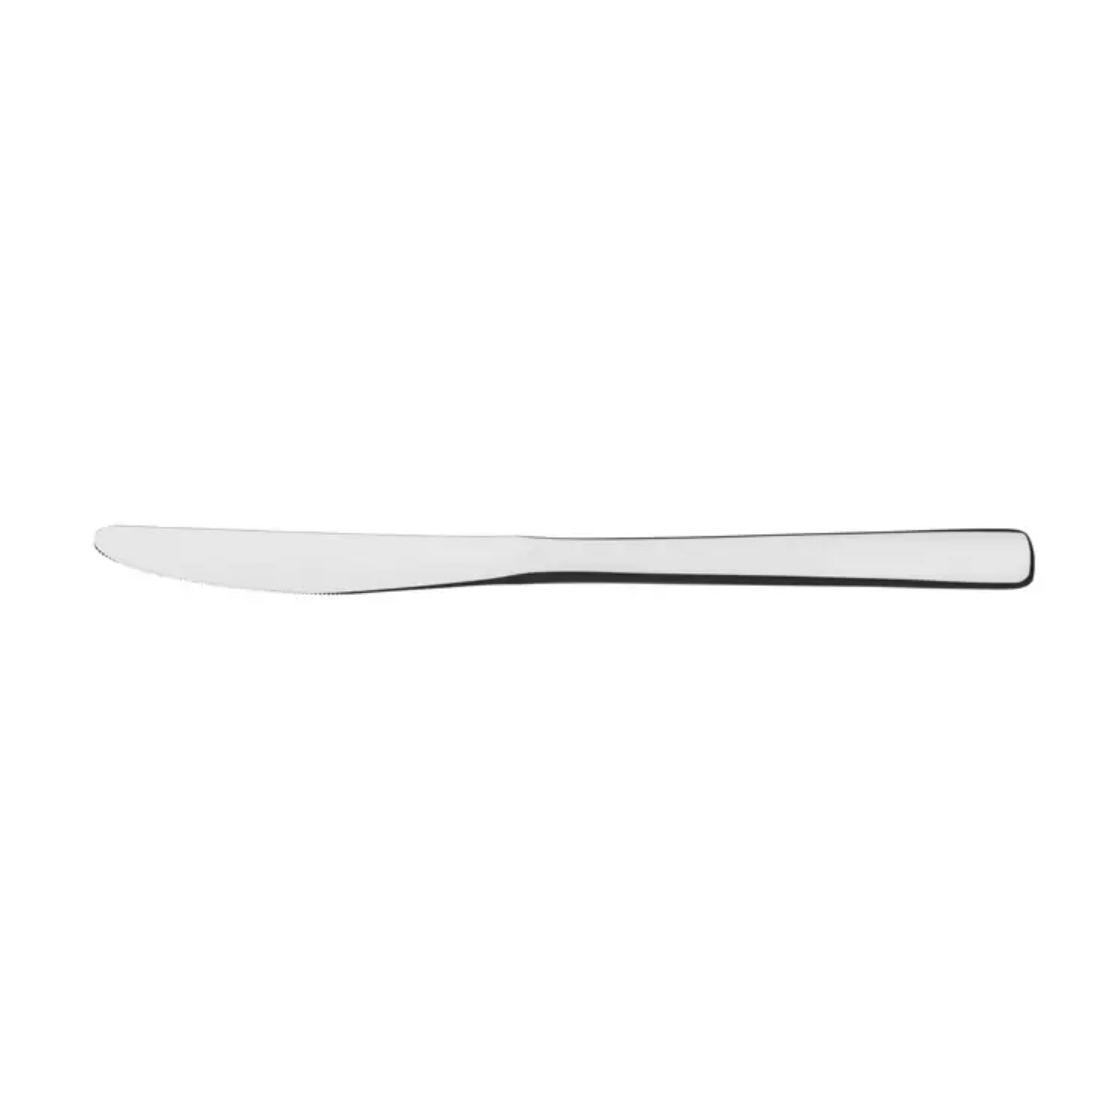 Нож столовый Tramontina Berlin, 22.4 см